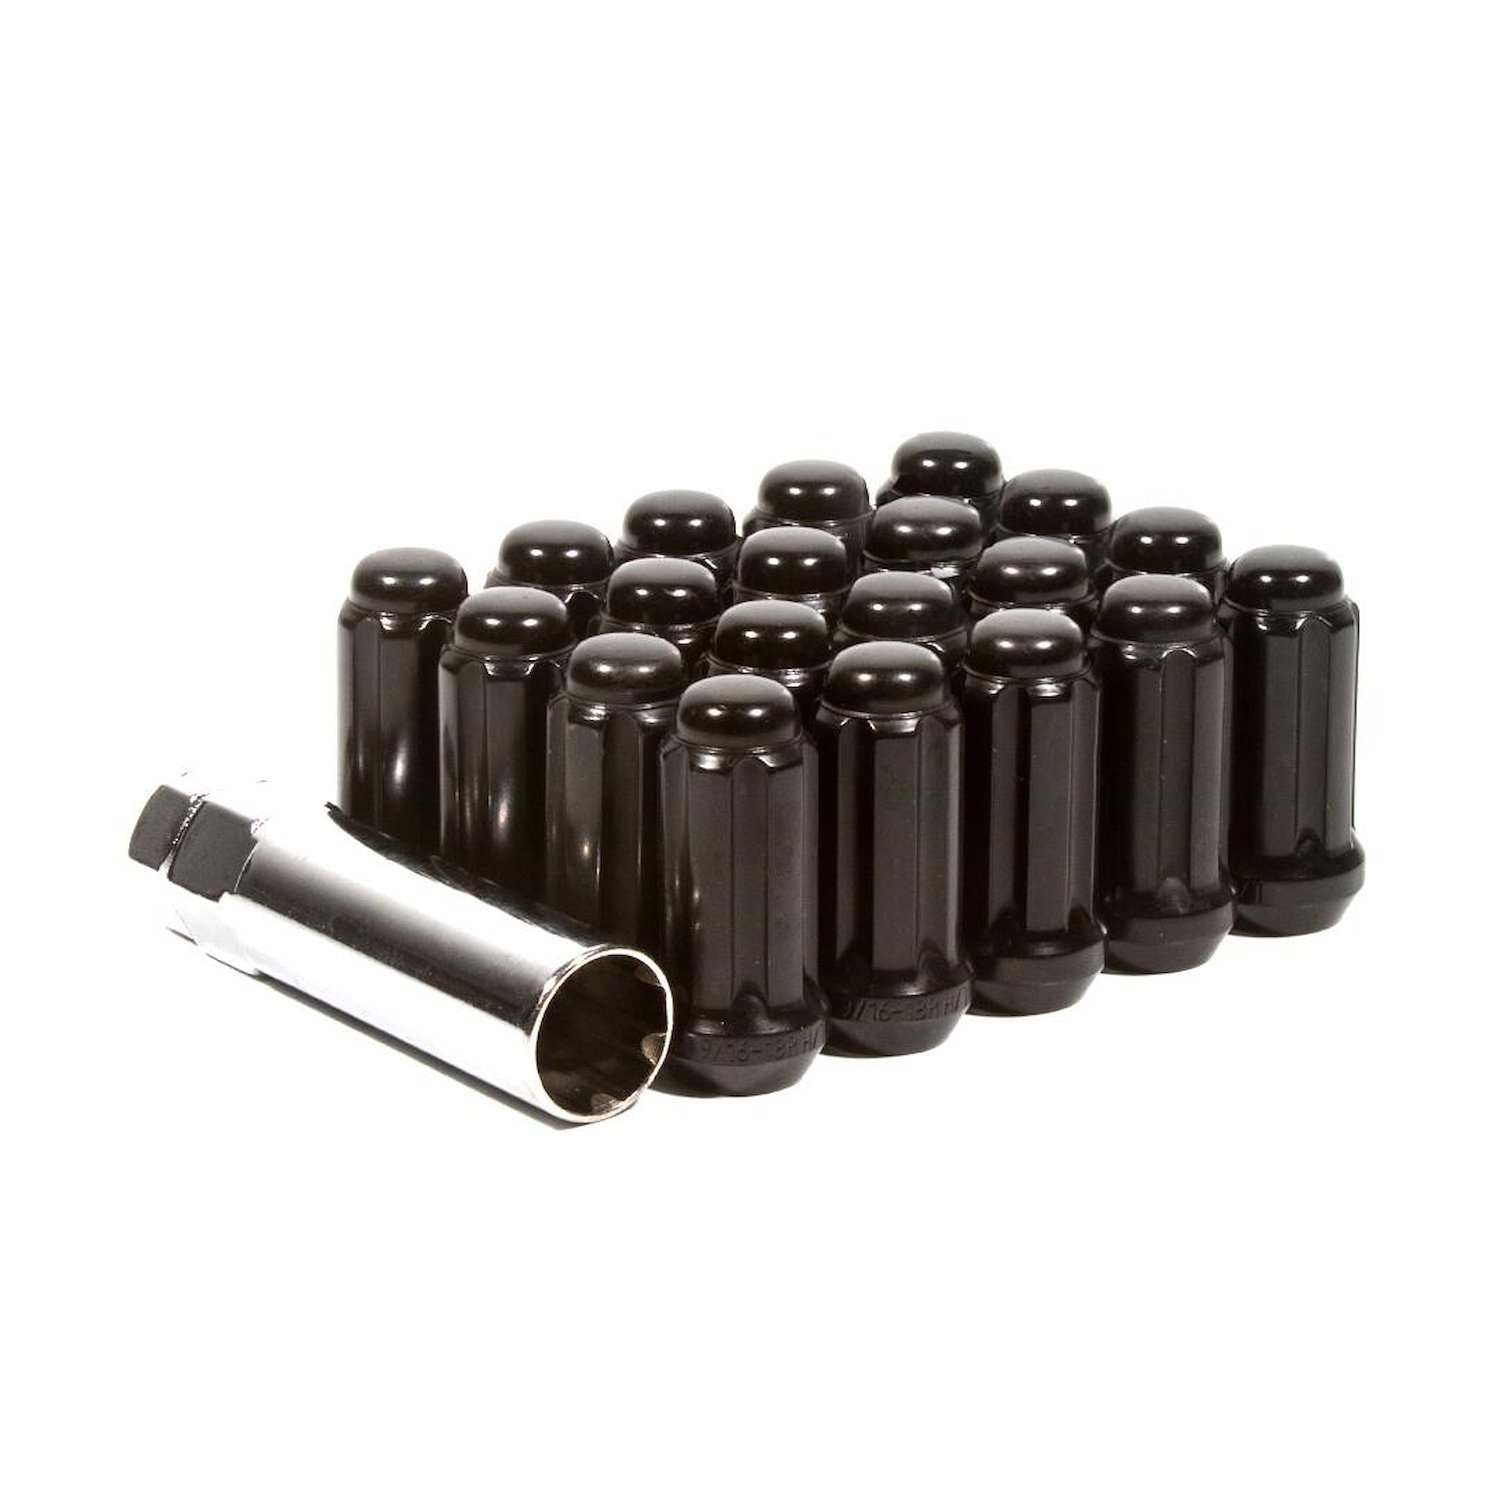 LK-W56015SB Lug Kit, Spline, M12X1.5, 6 Lug Kit, Black, 24 Nuts